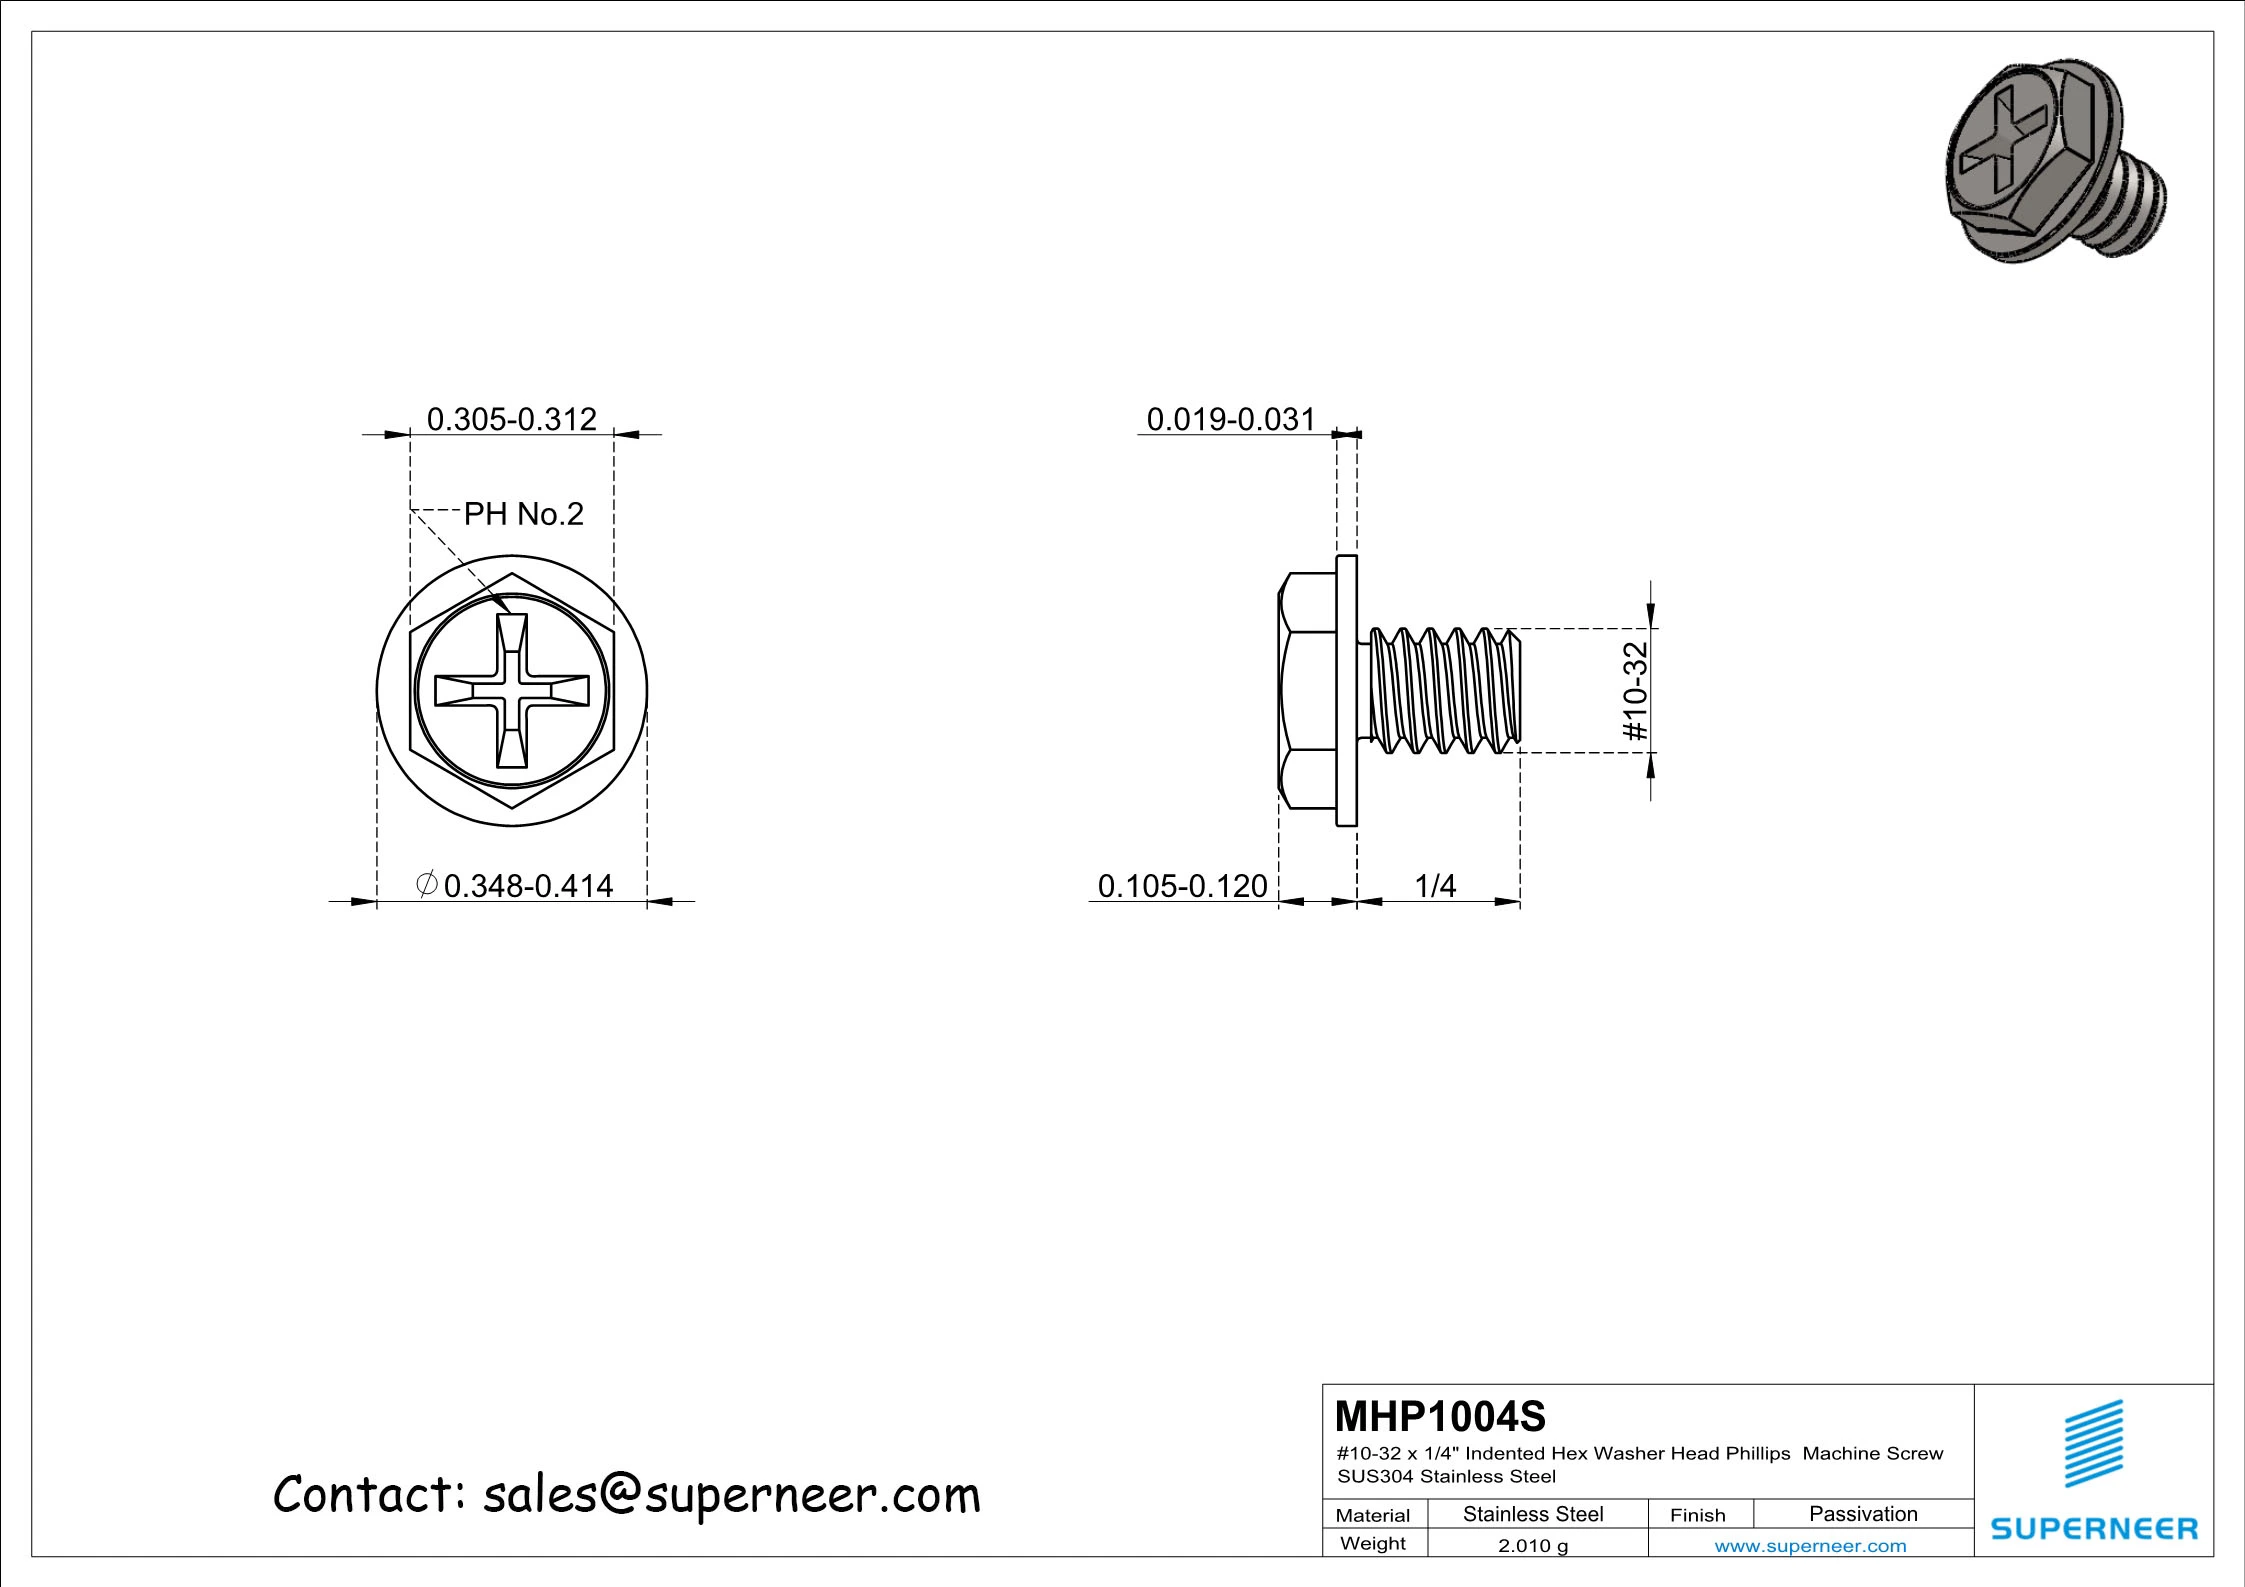 10-32 x 1/4" Indented Hex Washer Head Phillips Machine Screw SUS304 Stainless Steel Inox